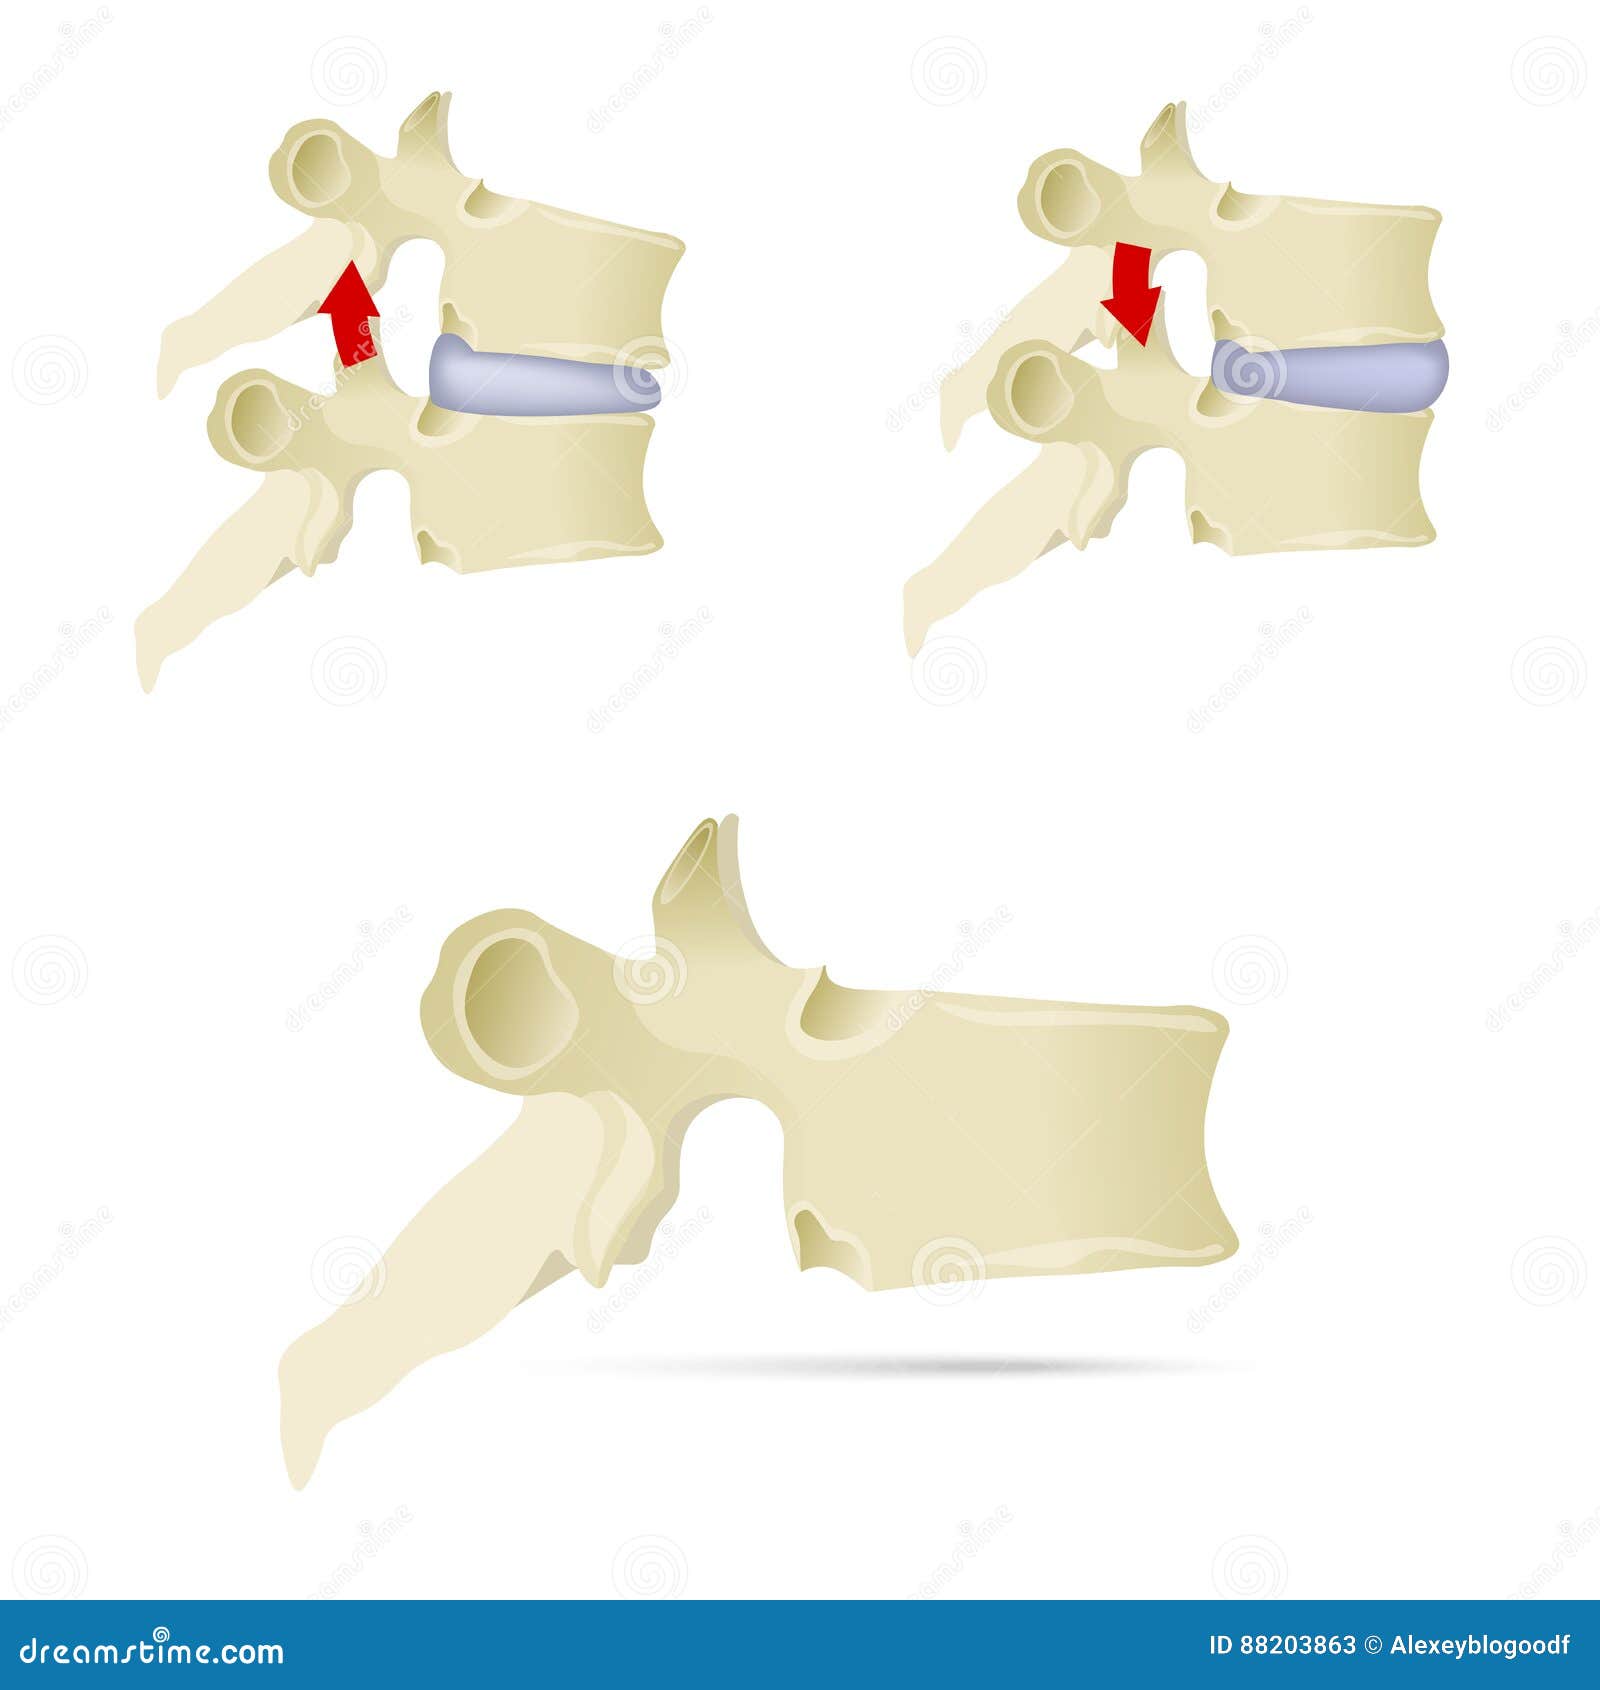 spine, lumbar vertebra. facet syndrome, advanced uncovertebral a